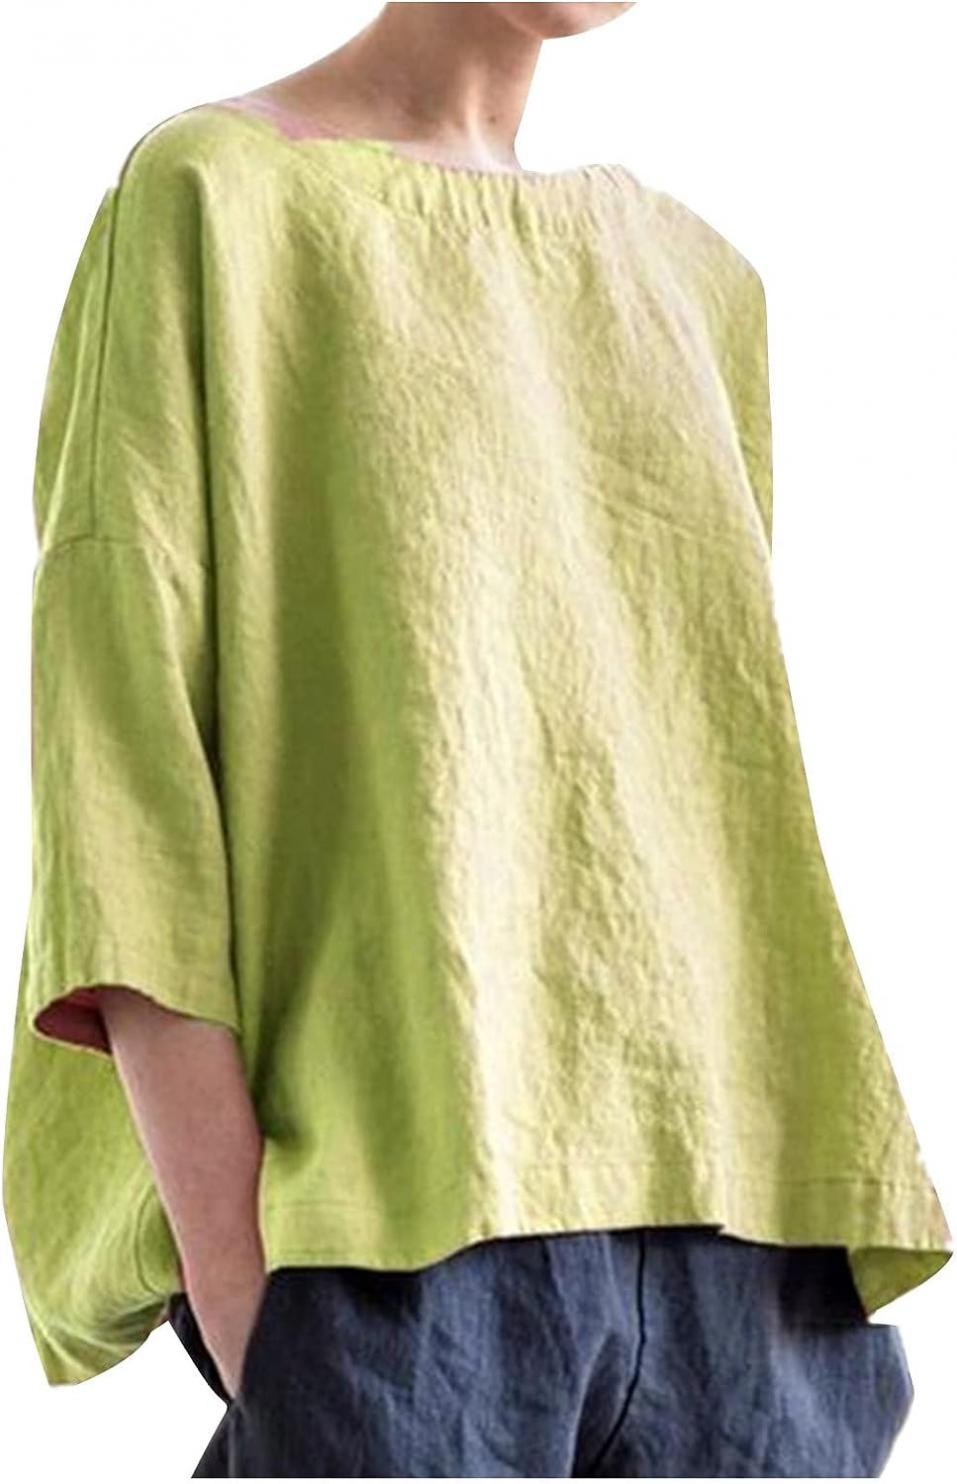 Women's Cotton Linen Shirts Blouse High Low Shirt 3/4 Short Sleeve Tops Solid Color Plain Top Basic Crop Tees T-Shirts